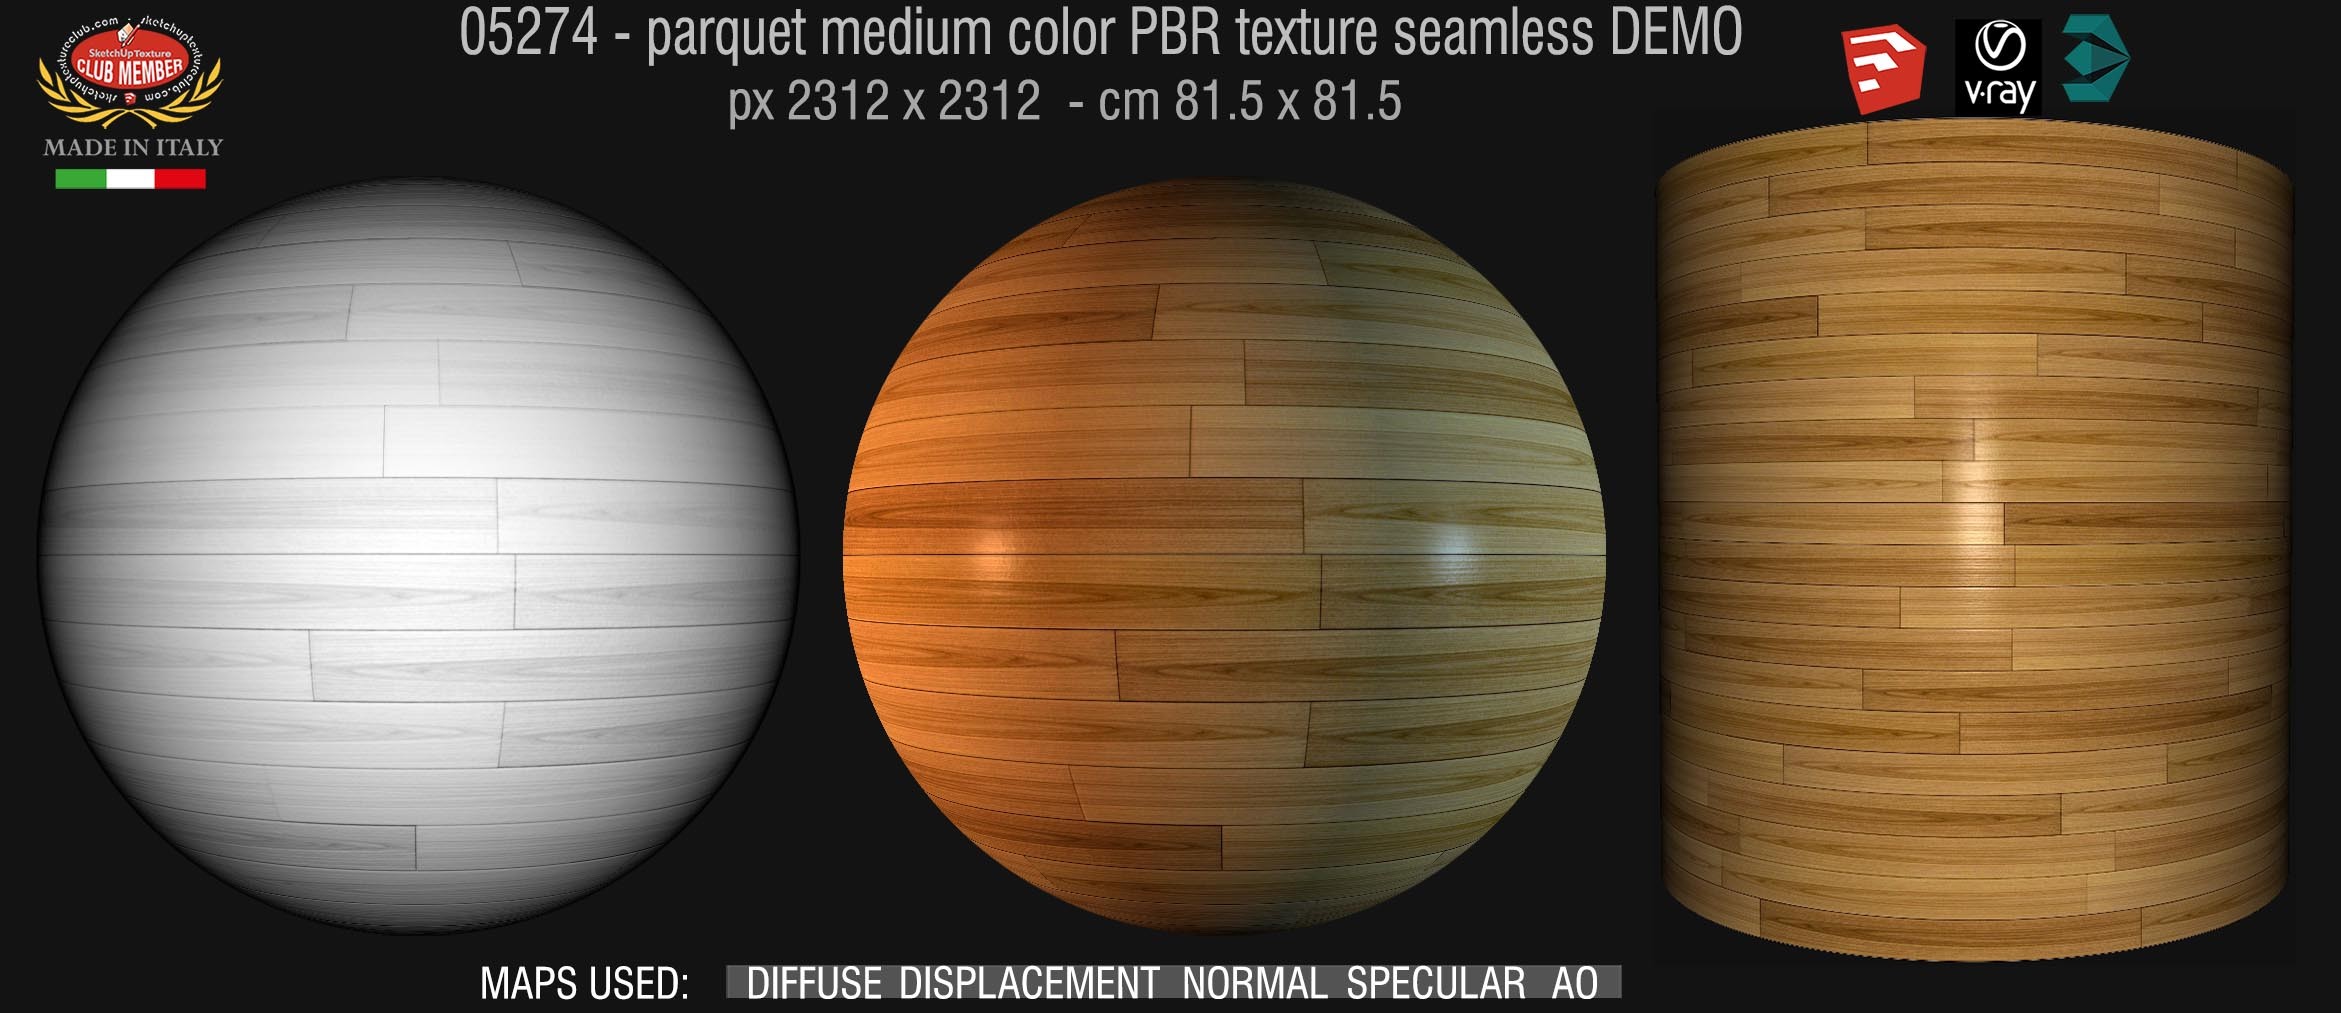 05274 parquet medium color PBR texture seamless DEMO